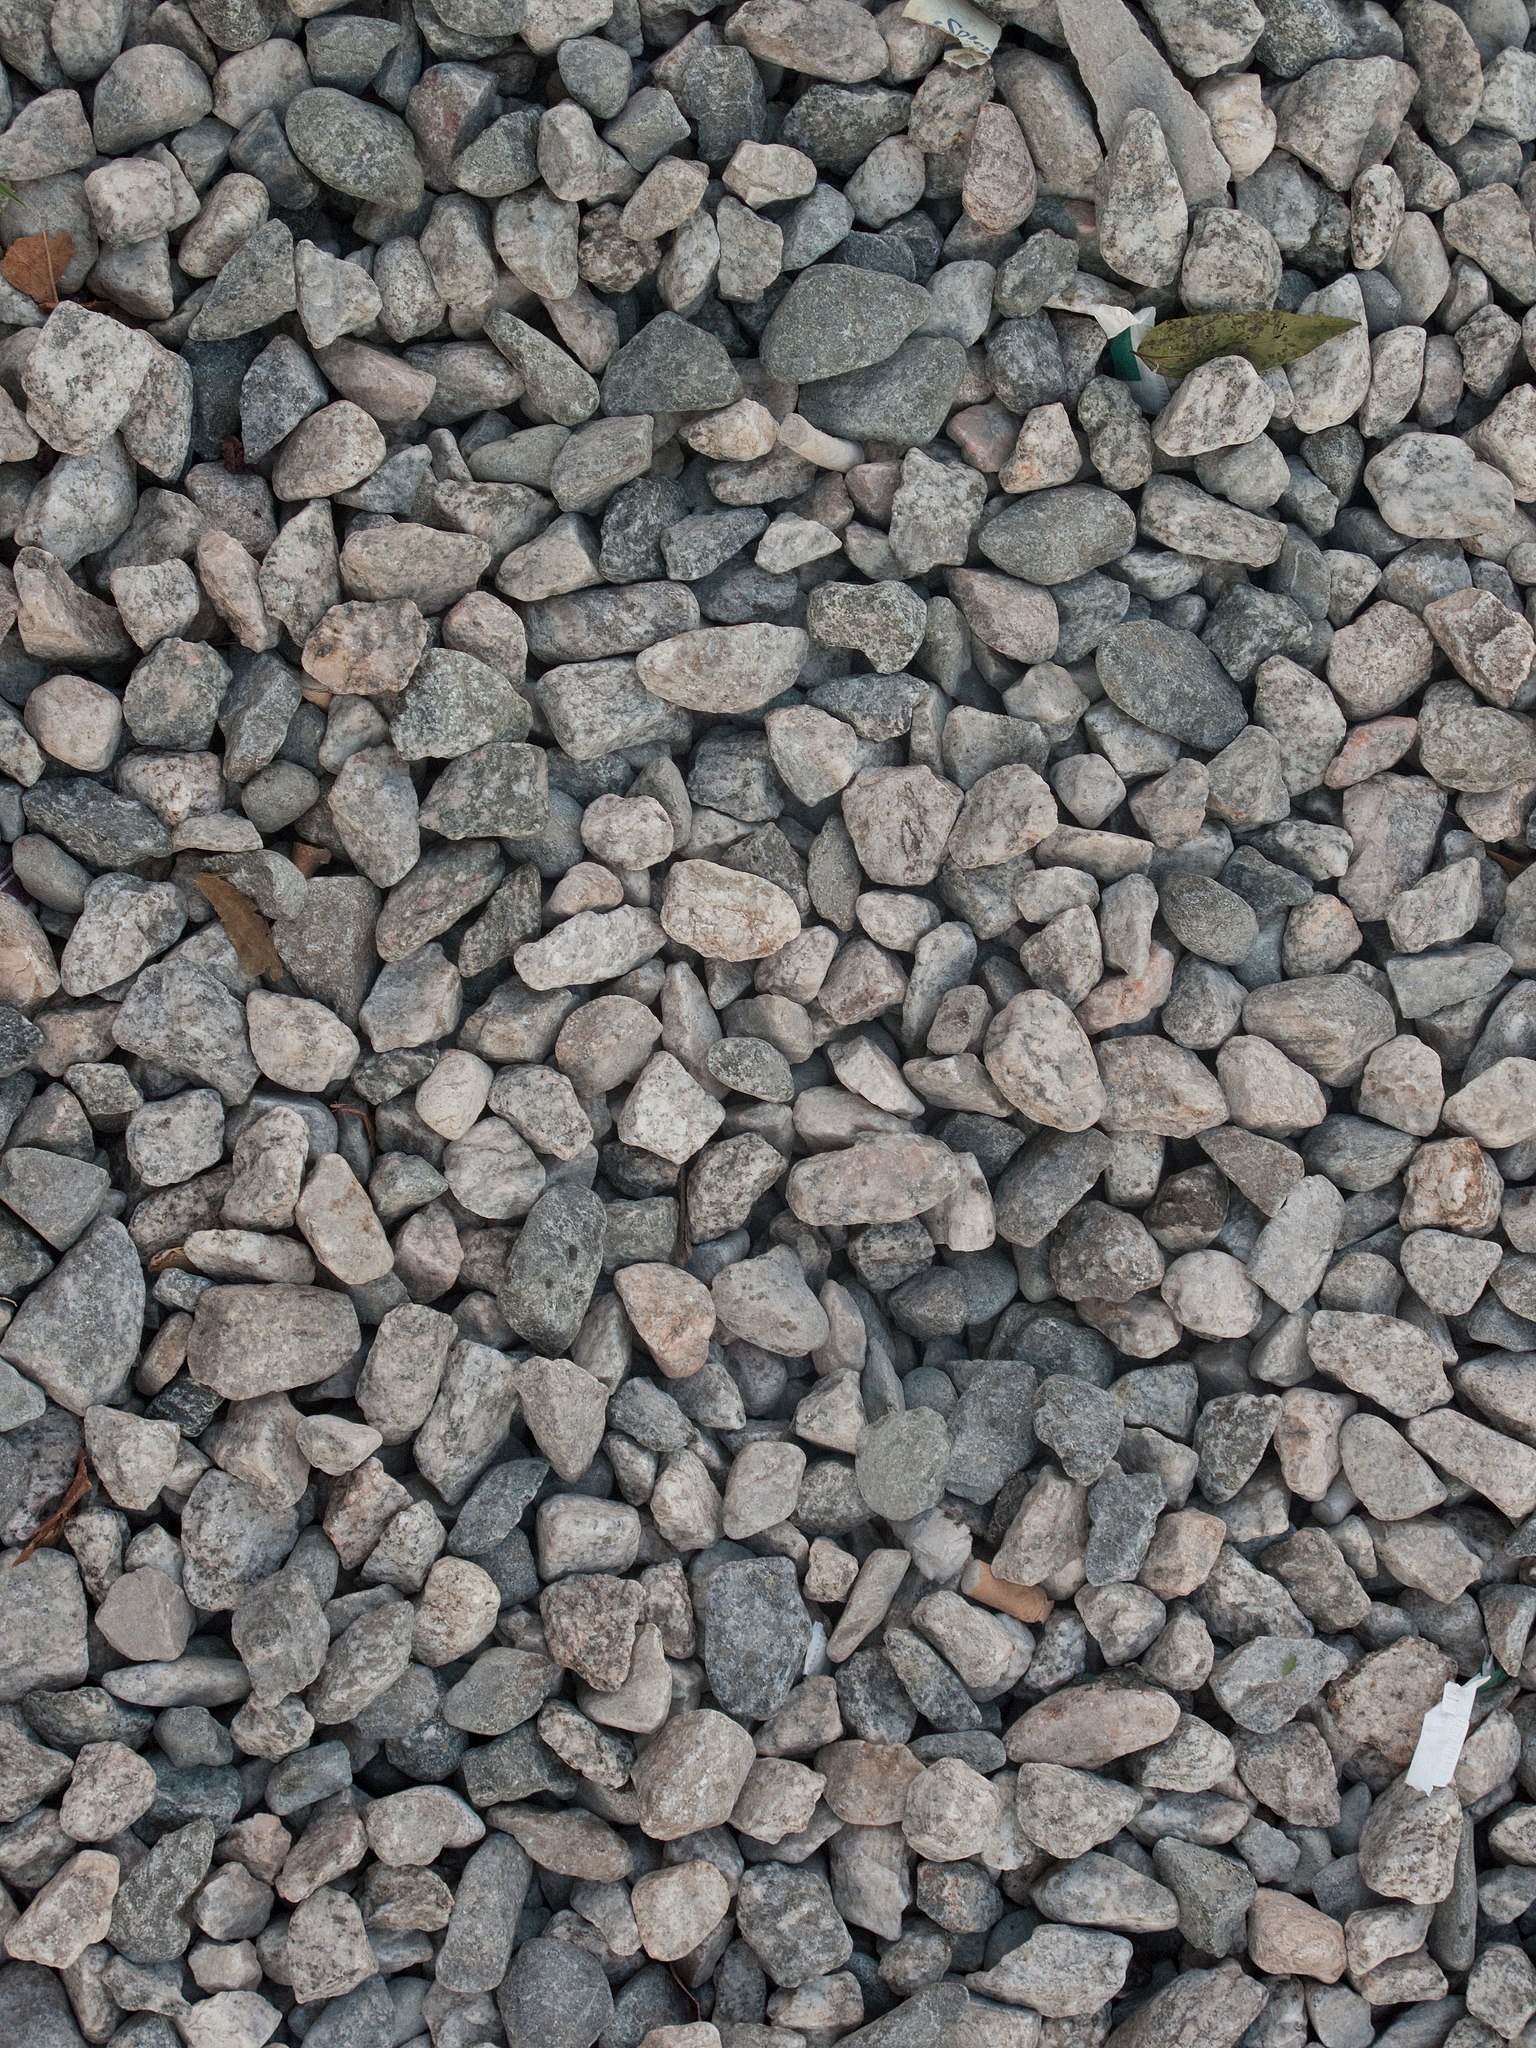 File:Granite pieces.jpg - Wikimedia Commons